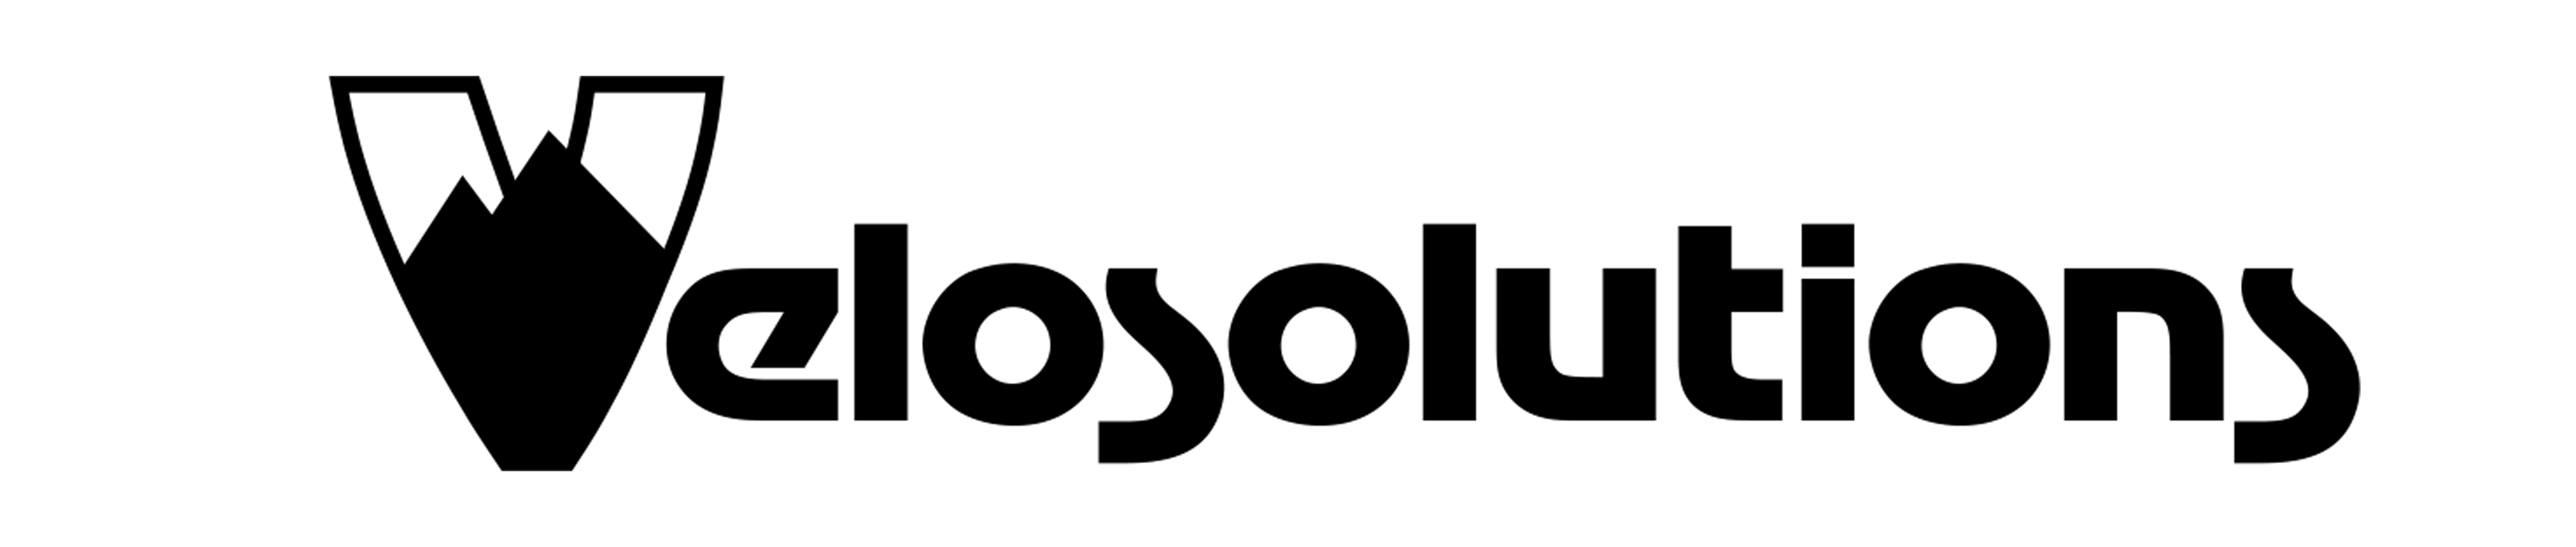 Testimonial Logo 2